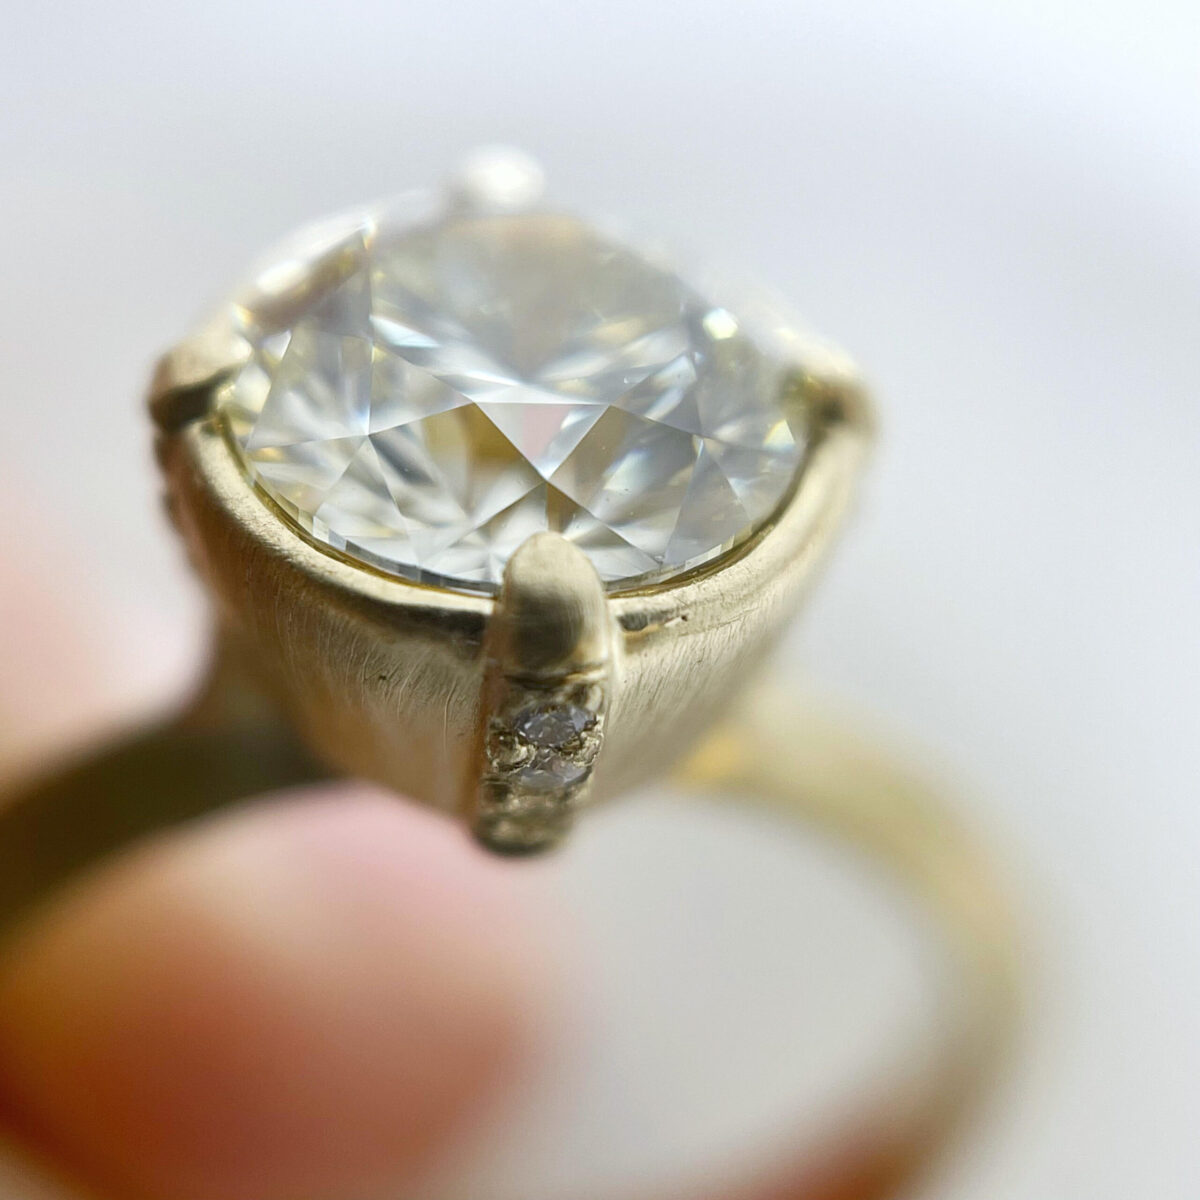 1.5 CT Diamond Underbezel Ring